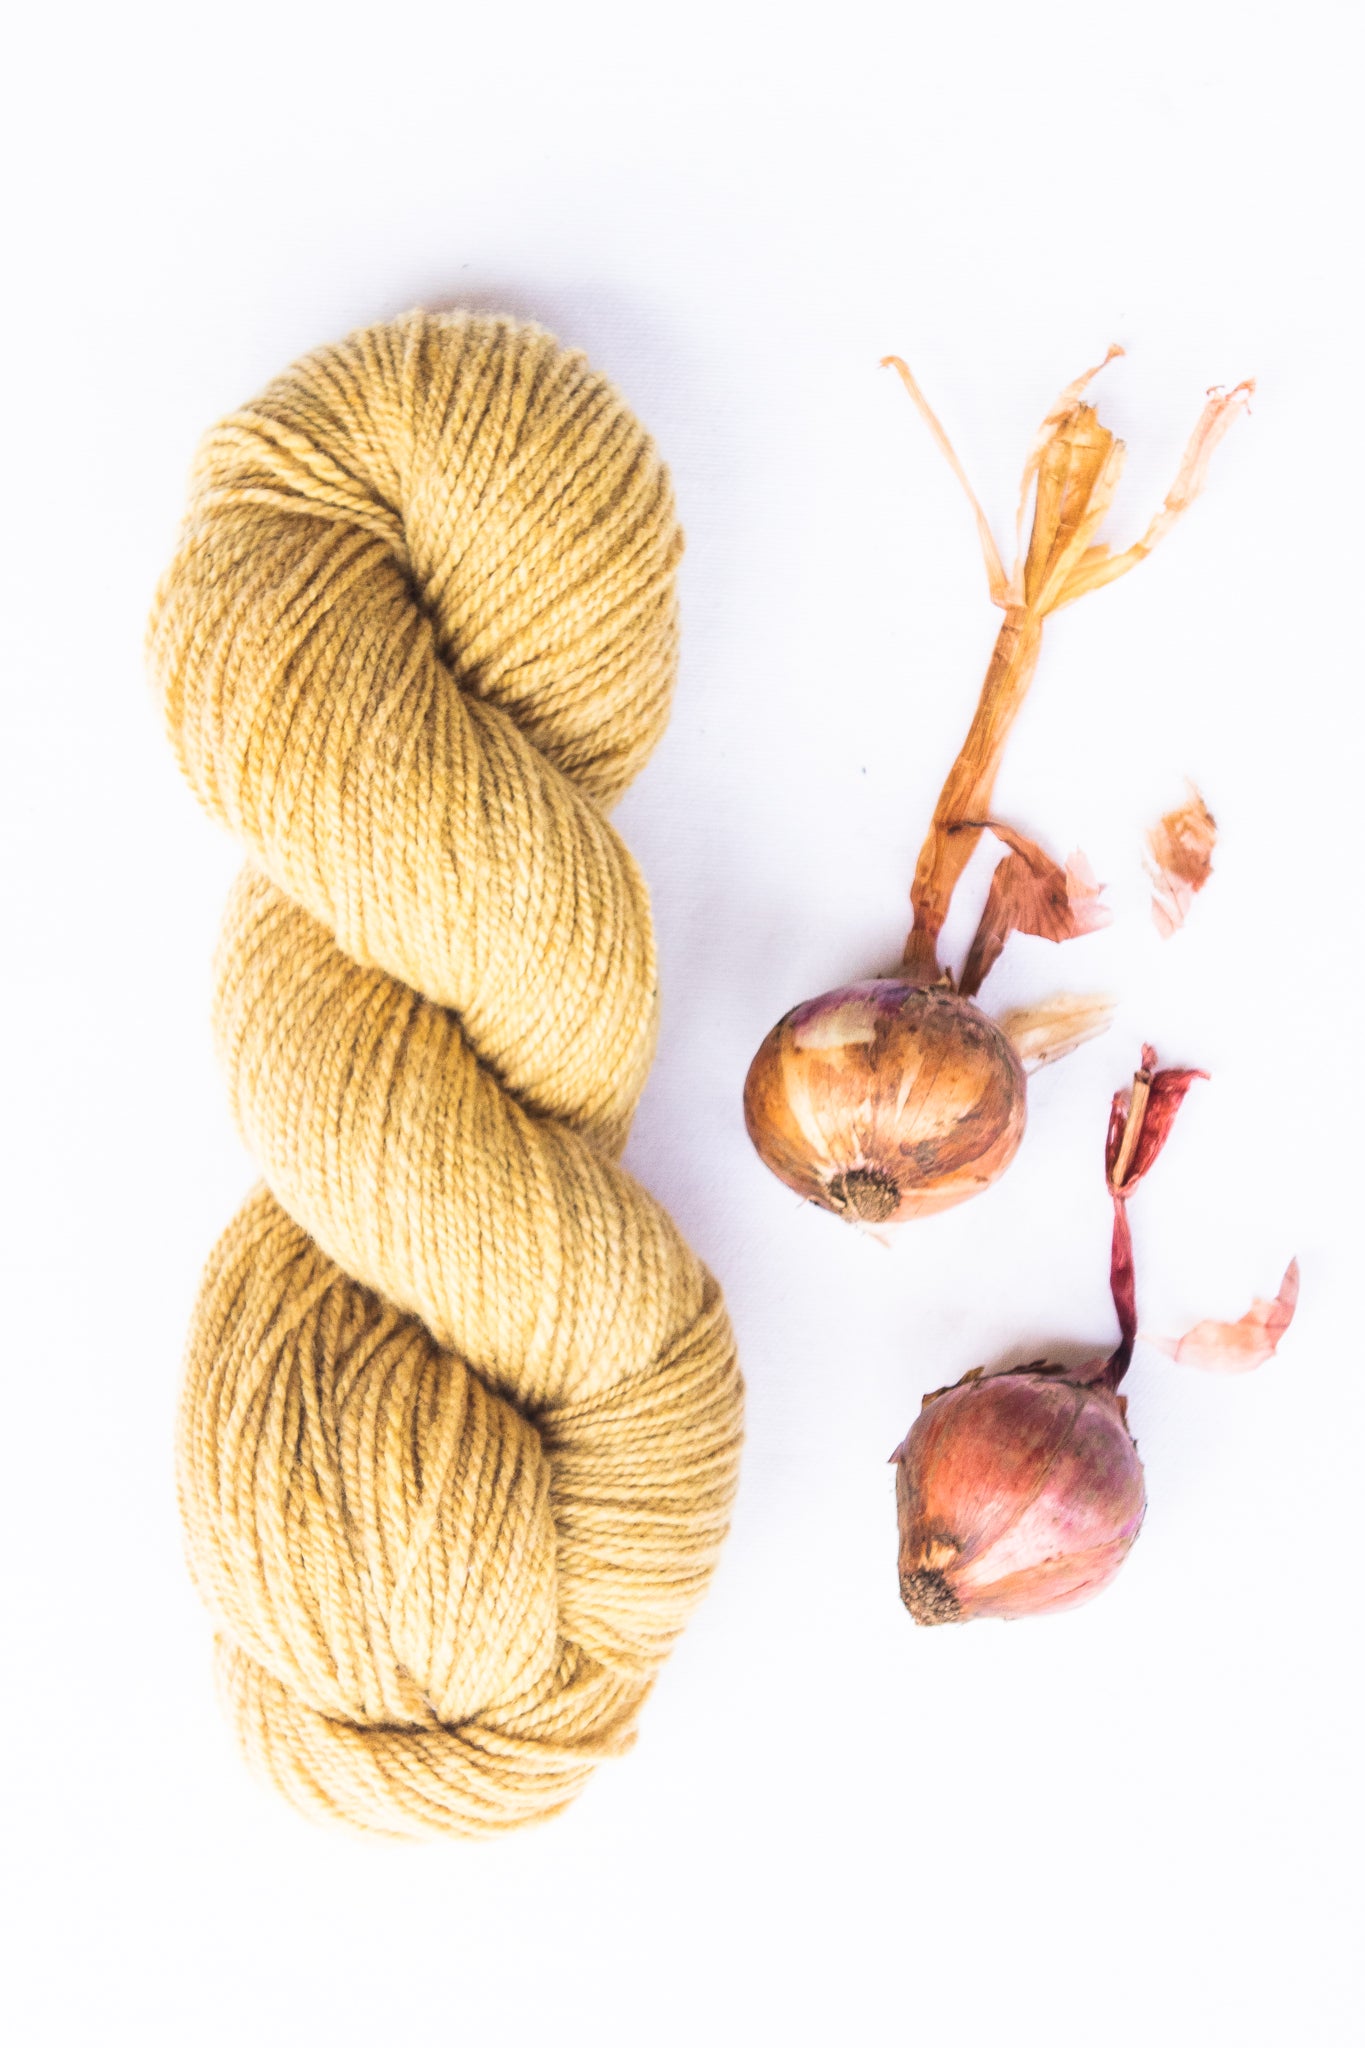 Organic Merino Wool Yarn, Shallot